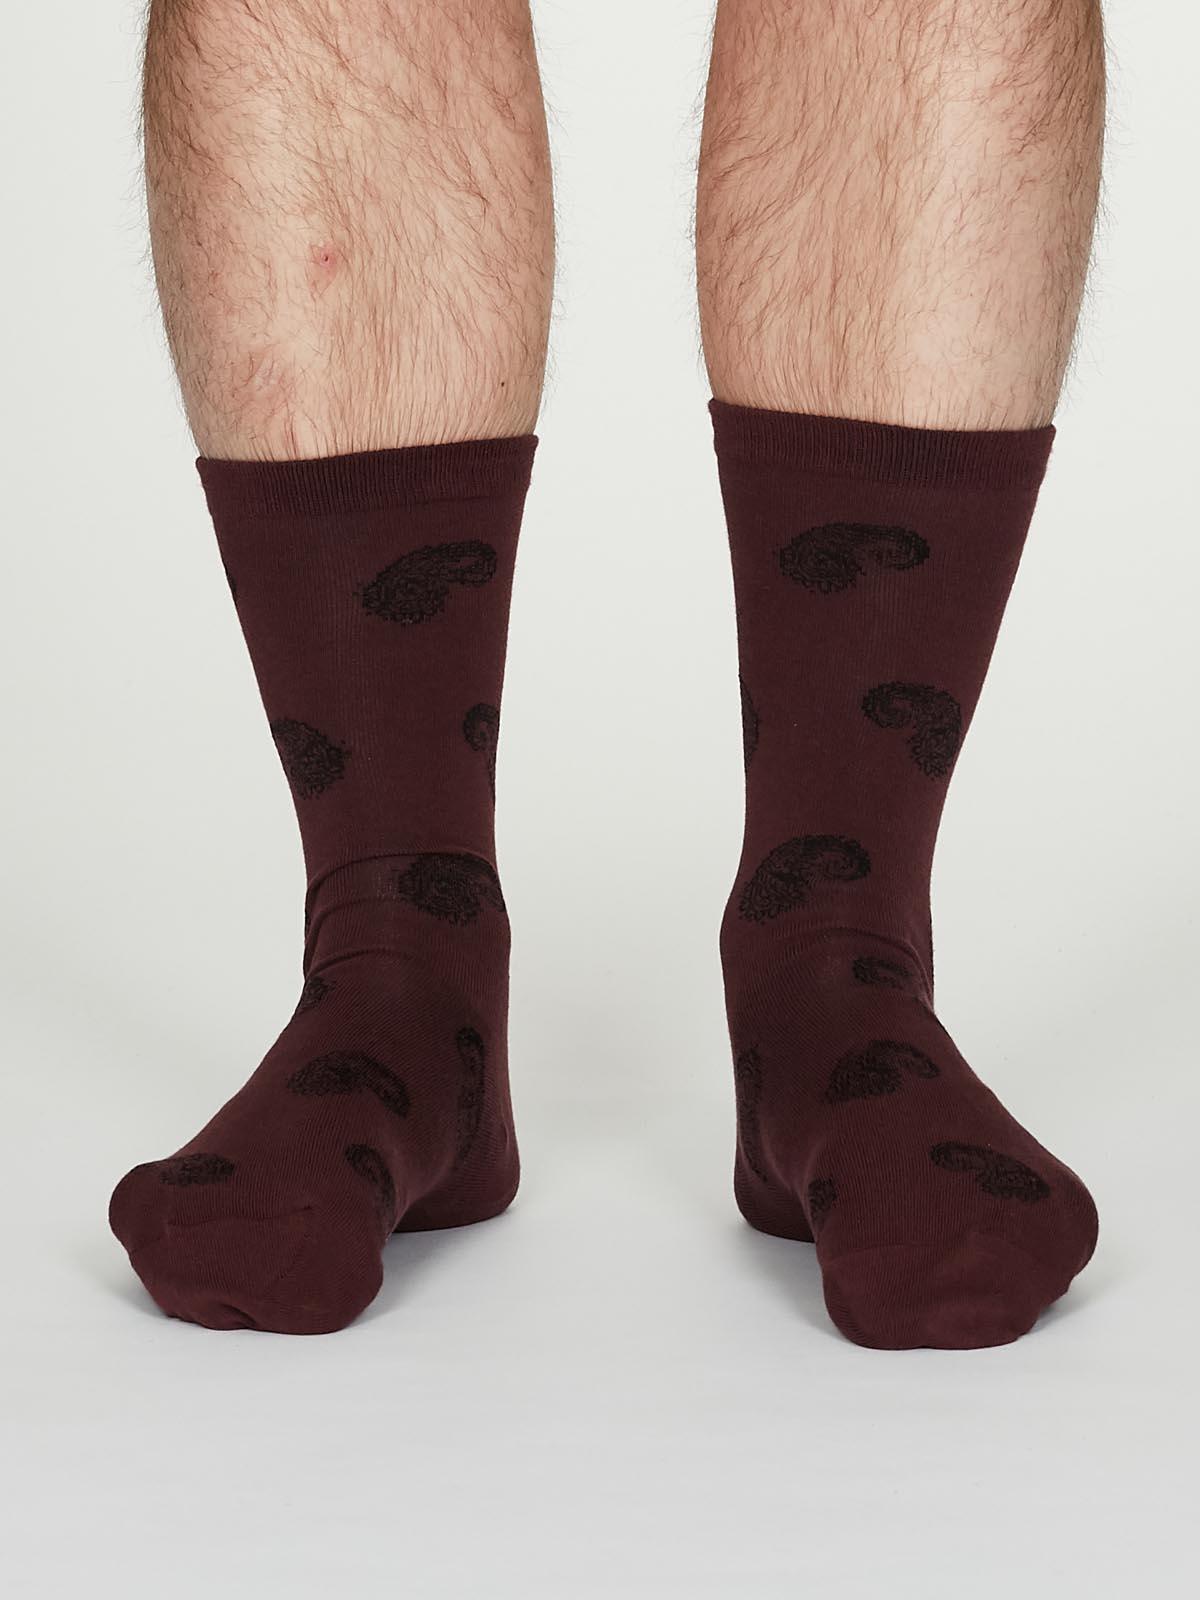 Homer Socks - Burgundy - Thought Clothing UK